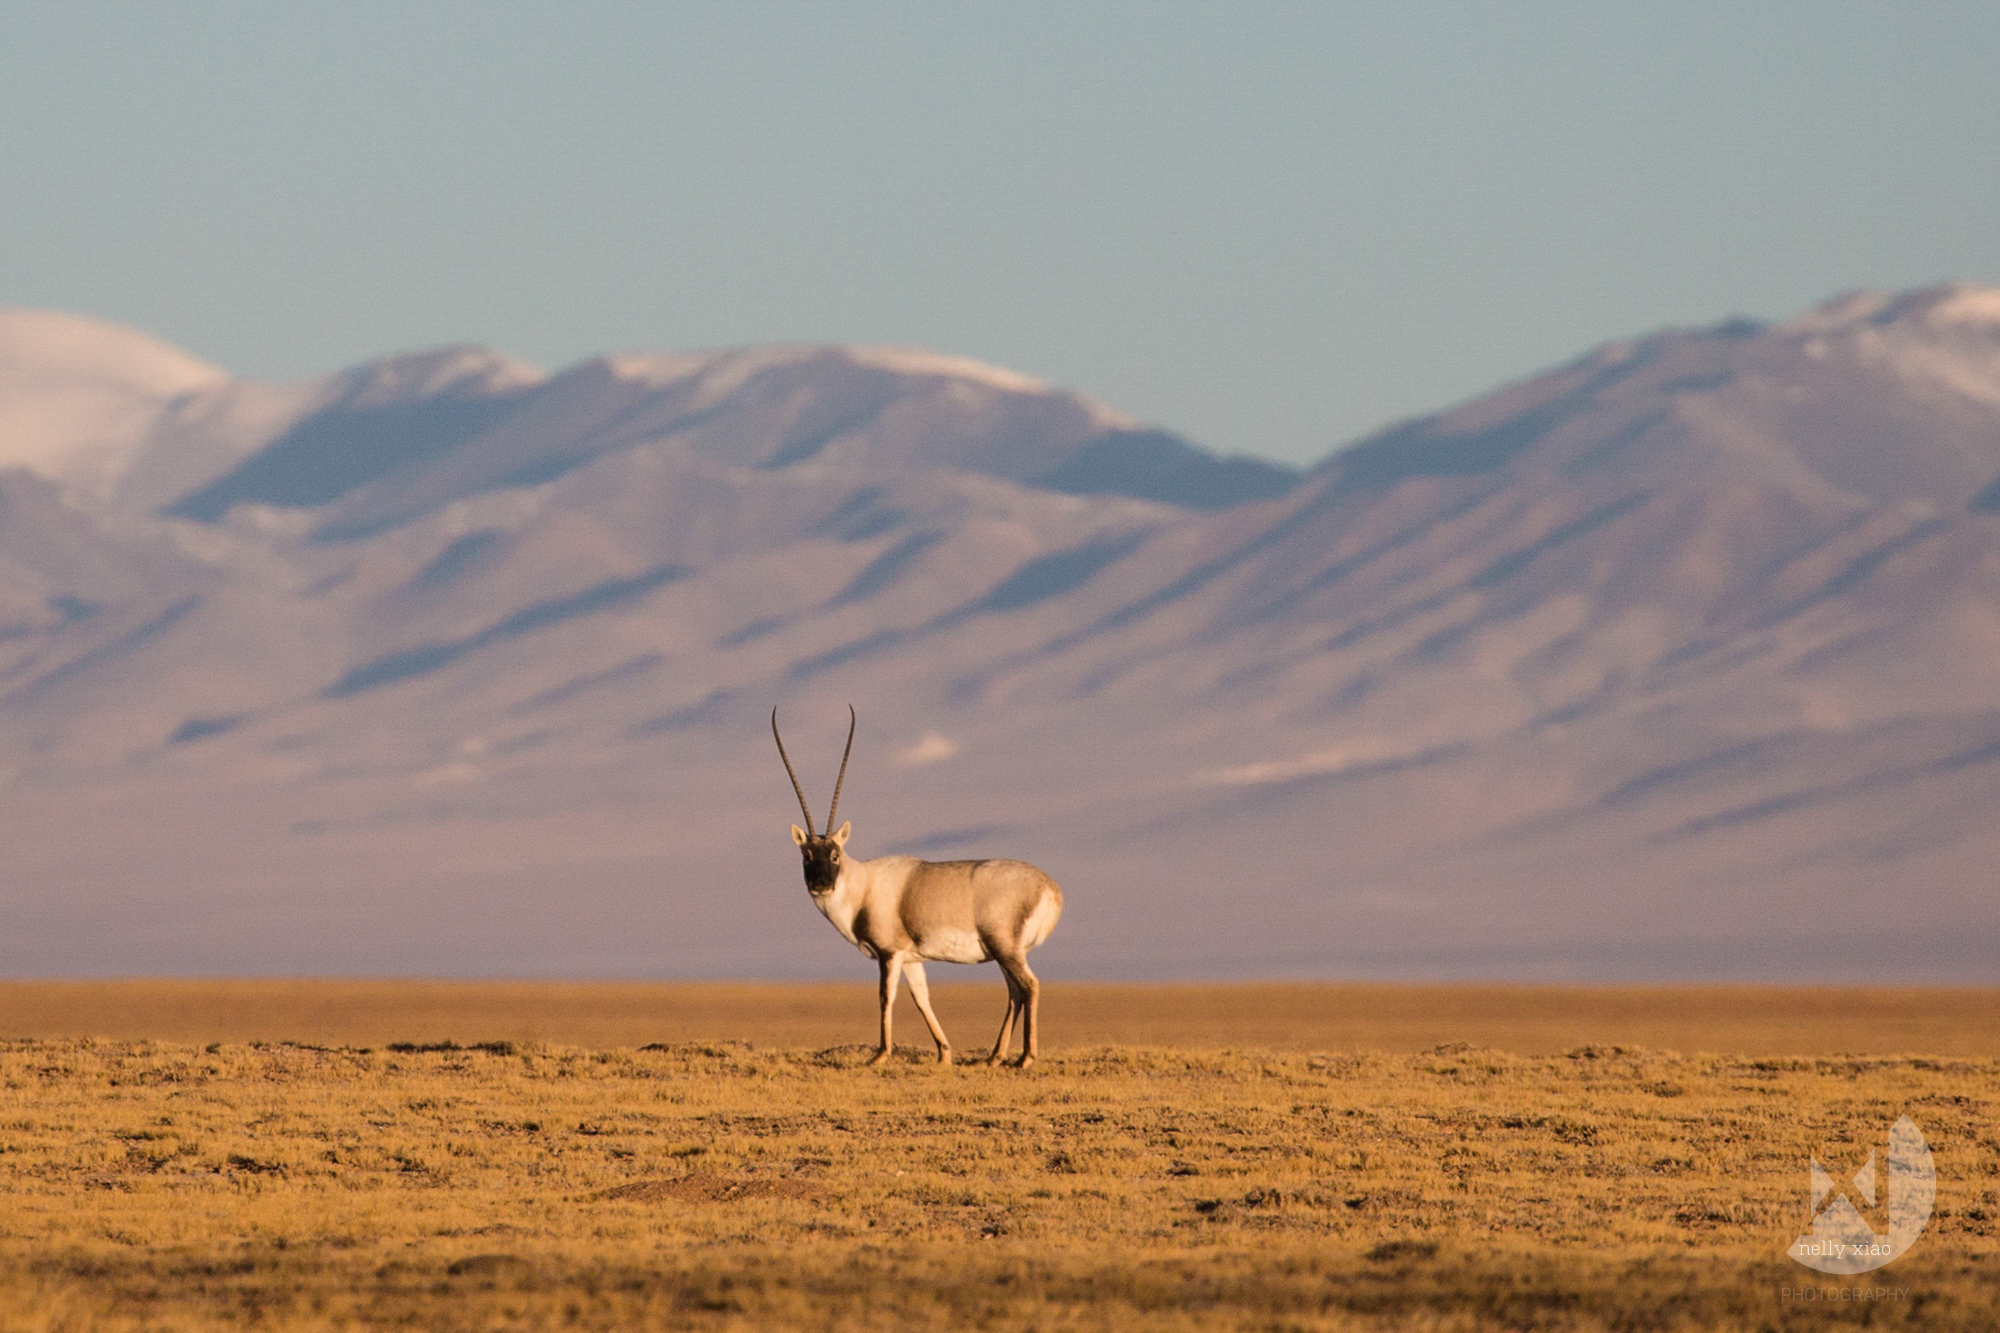   Tibetan antelope (male)   Kekexili Wildlife Conservation, November 2015 